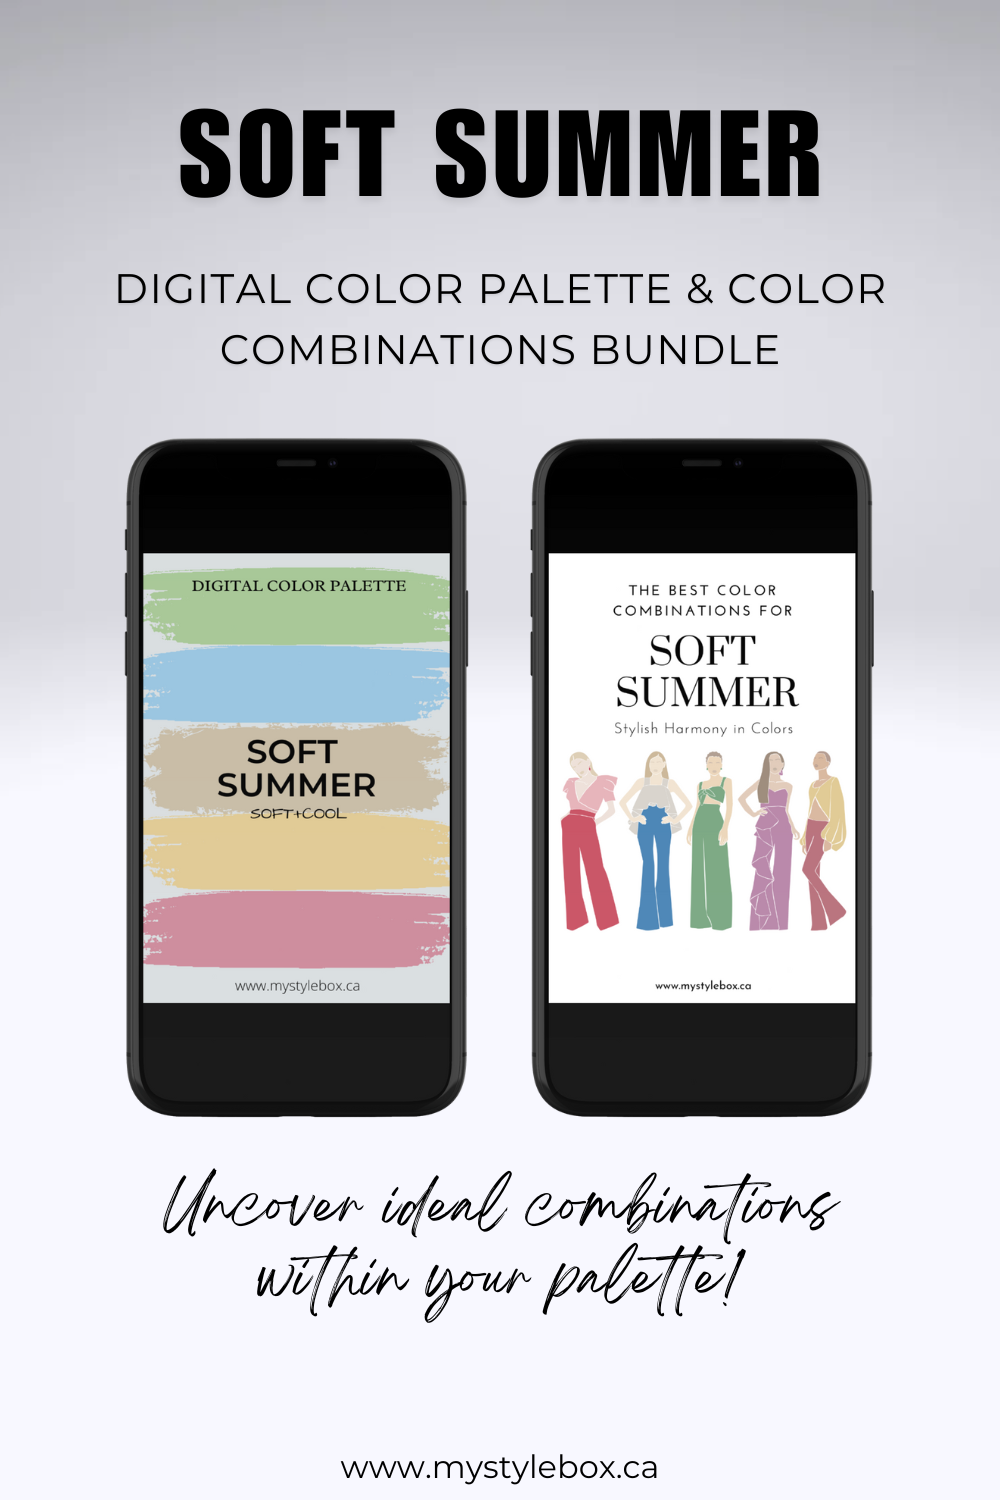 Soft Summer Season Digital Color Palette and Color Combinations